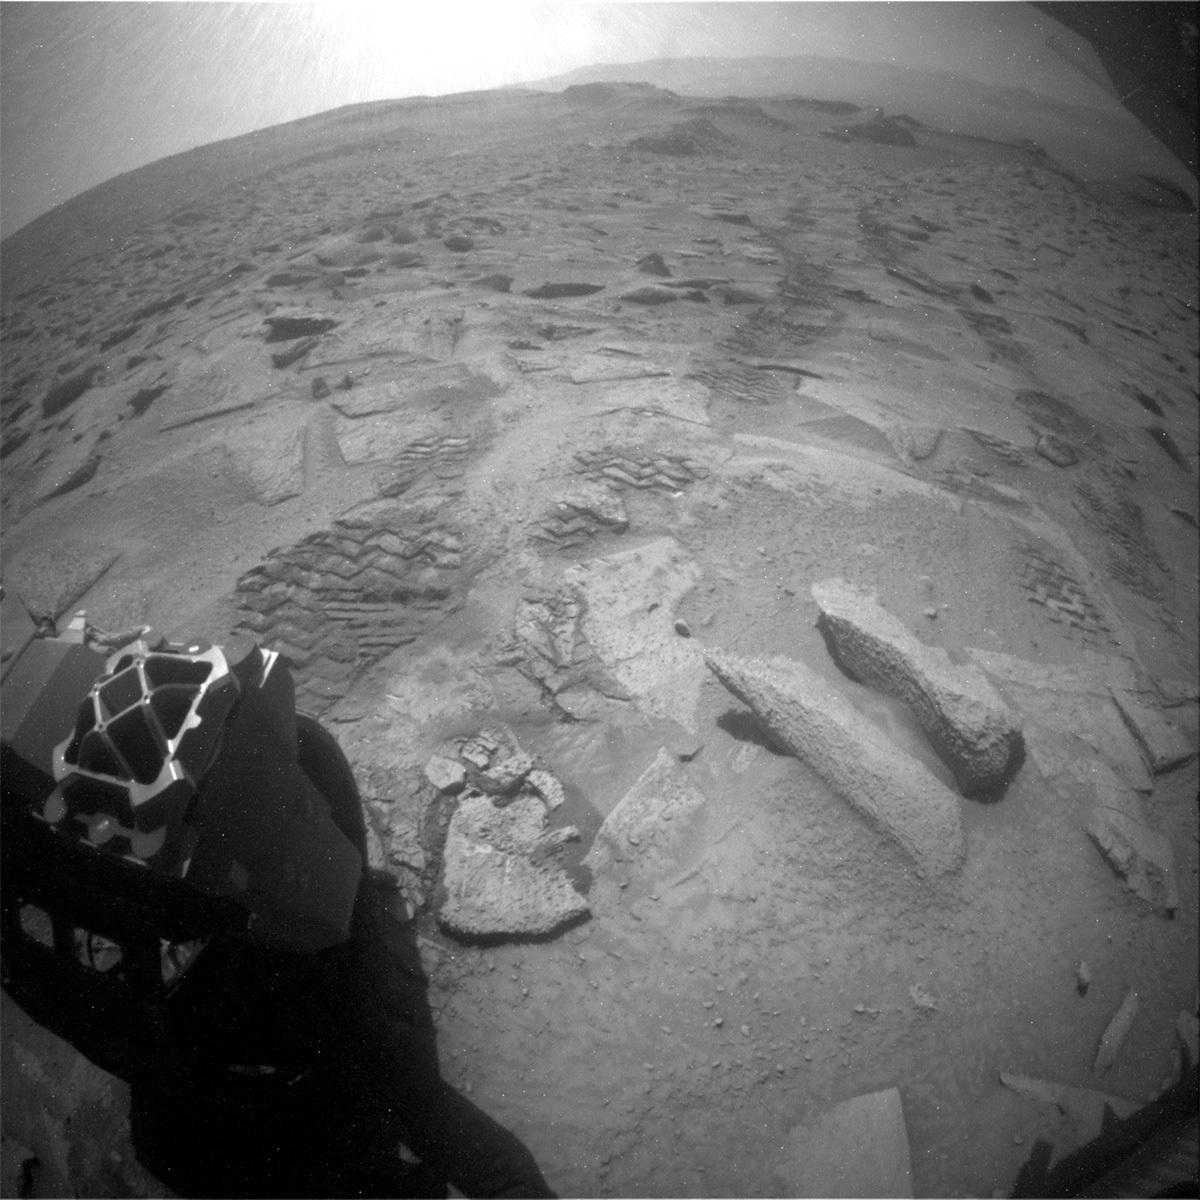 This image was taken by Rear Hazard Avoidance Camera (Rear Hazcam) onboard NASA's Mars rover Curiosity on Sol 3837.